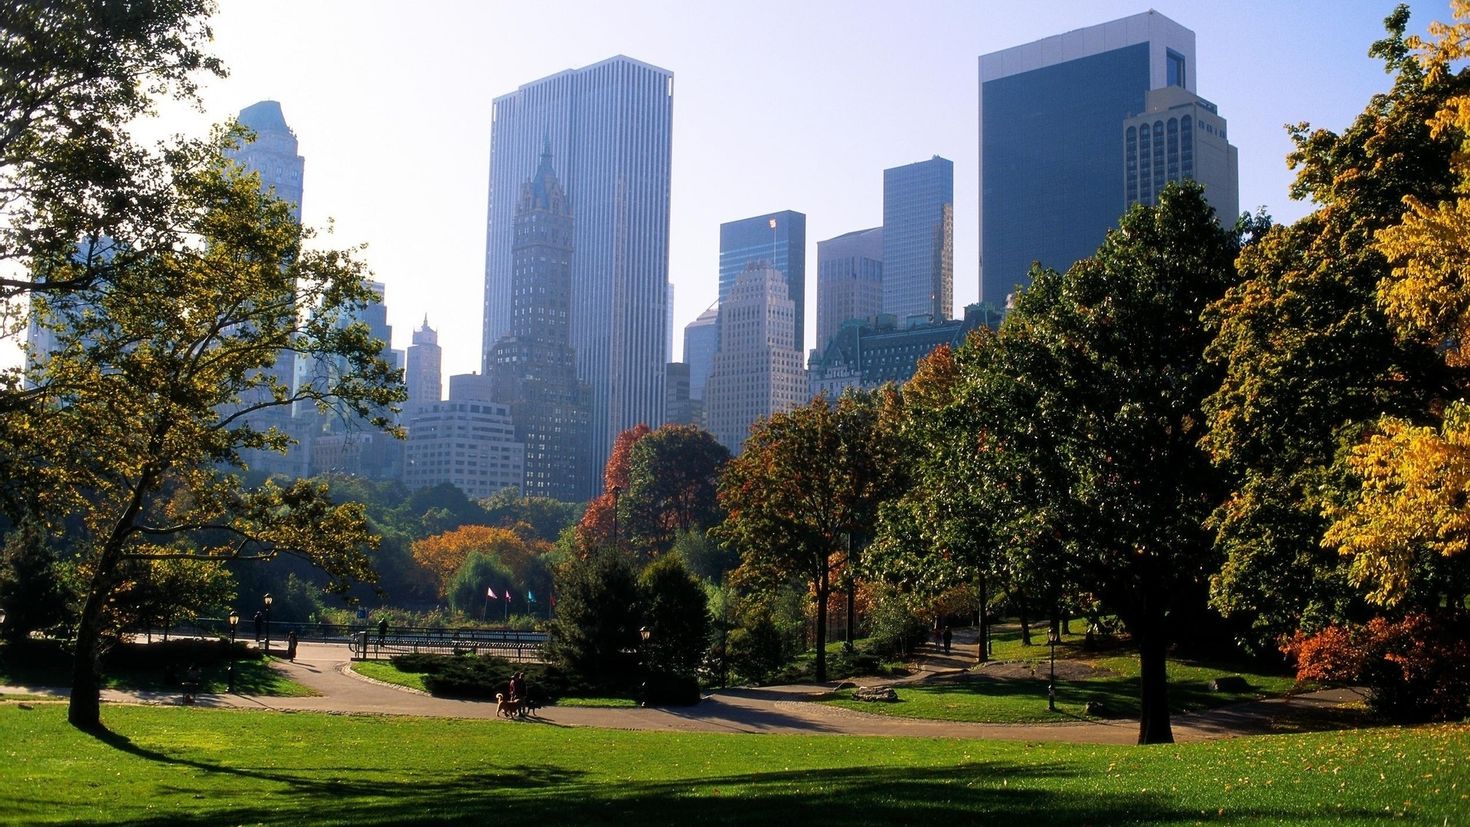 City naturals. Централ парк Нью-Йорк деревья. Центральный парк, Нью-Йорк, США. Центральный парк (г. Нью-Йорк, Манхэттен). Центральный парк ньйорк.